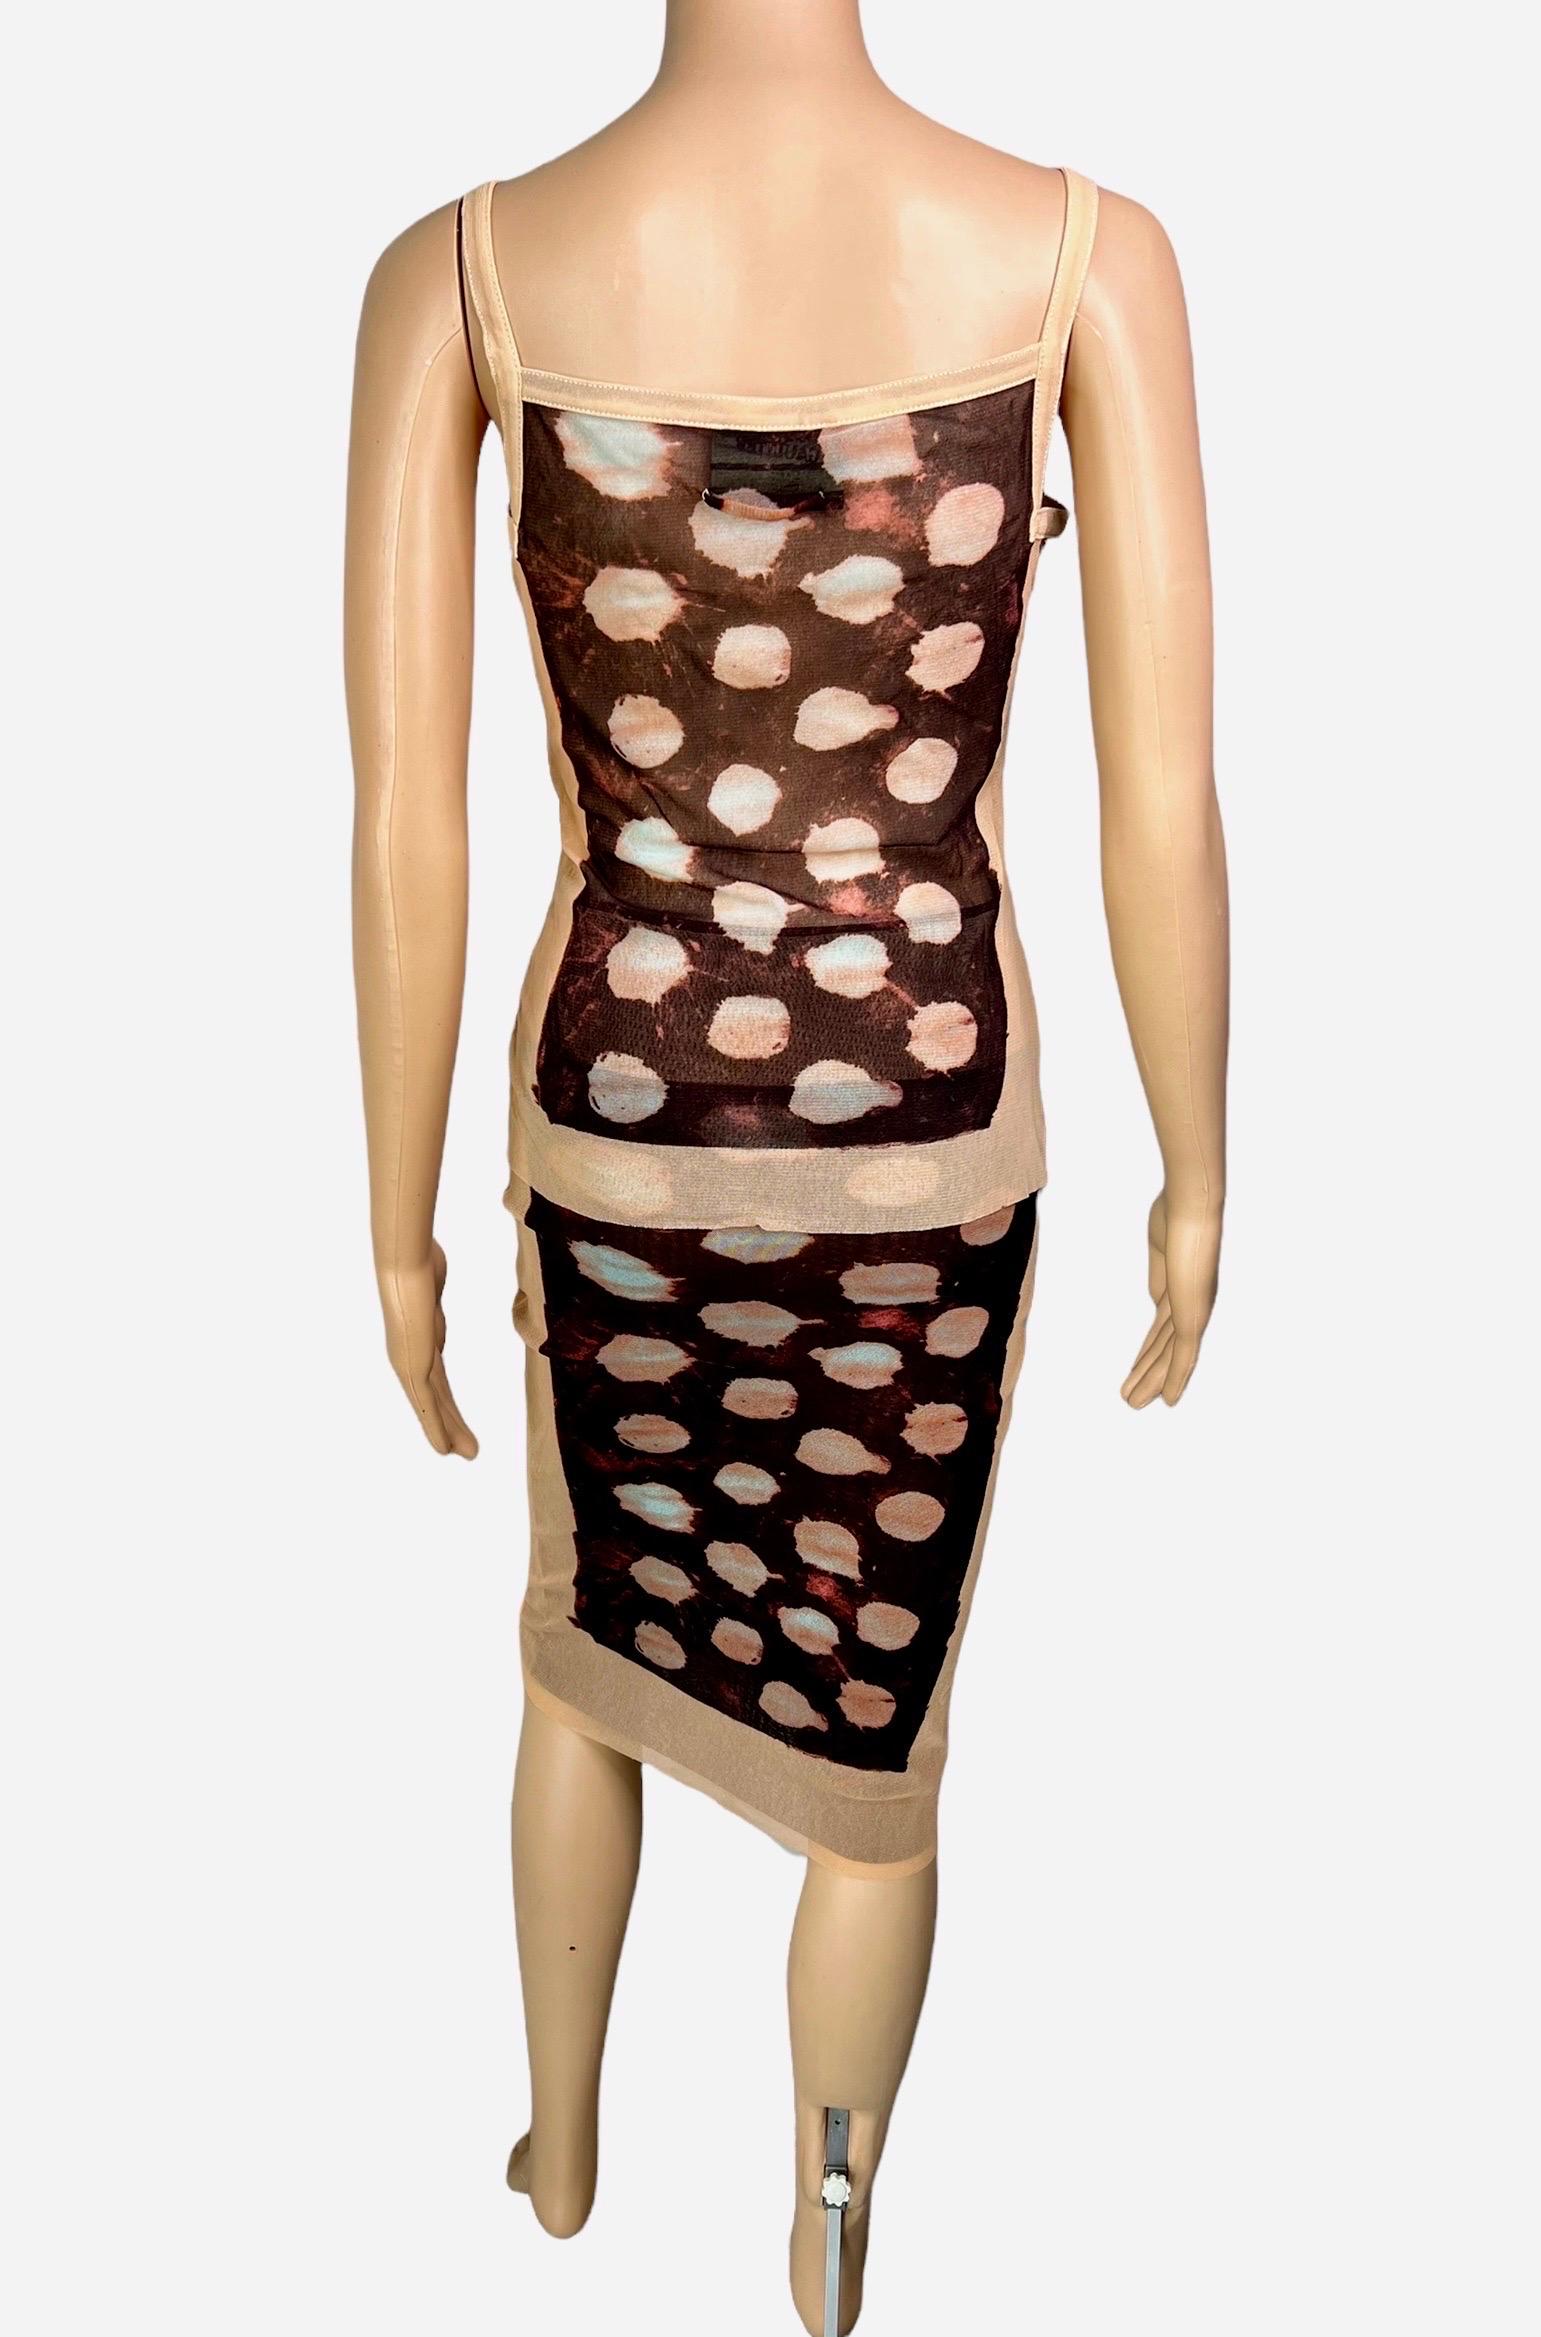 Women's or Men's Jean Paul Gaultier S/S 2001 Sheer Polka Dot Cardigan Top and Skirt 3 Piece Set For Sale